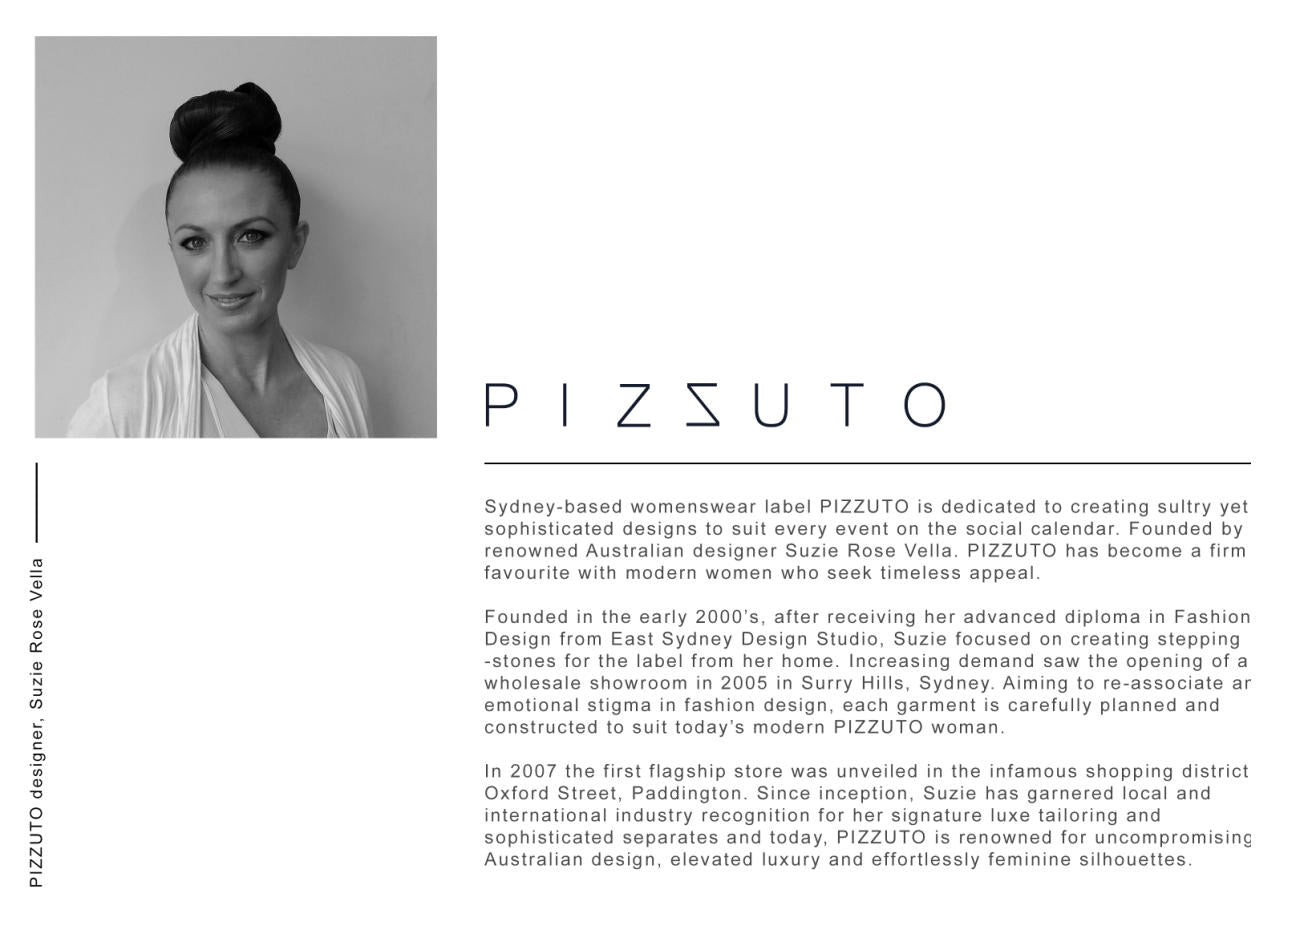 PIZZUTO Australian designer Suzie Rose Vella story